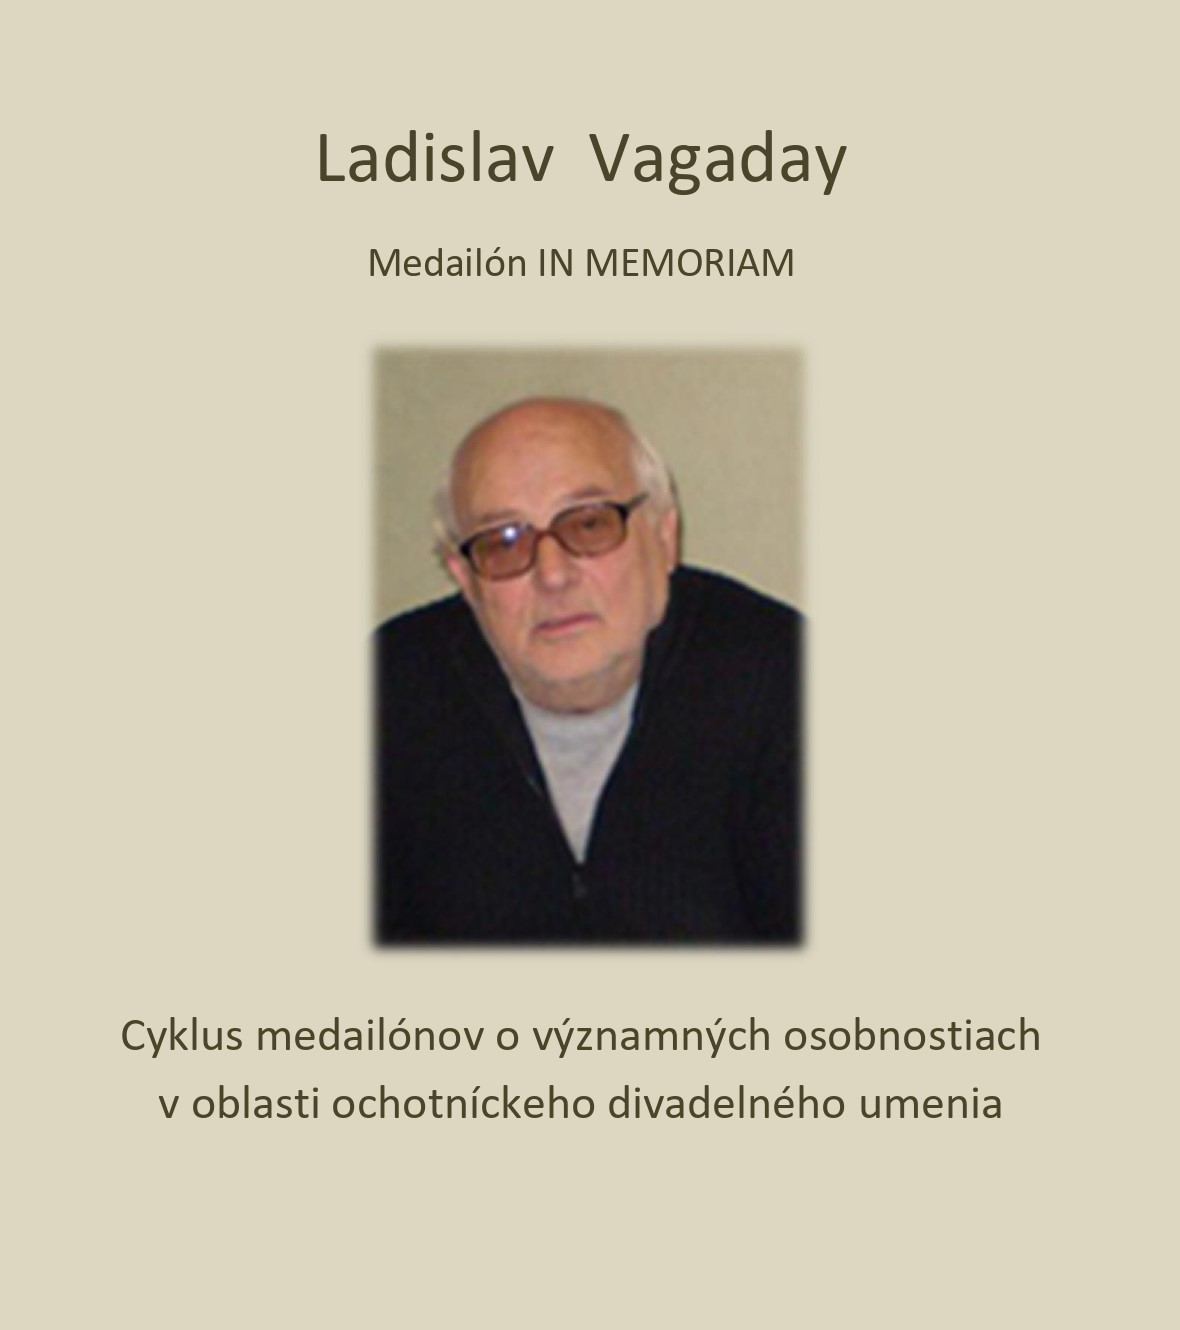 Ladislav Vagaday Titulná fotka page 0001